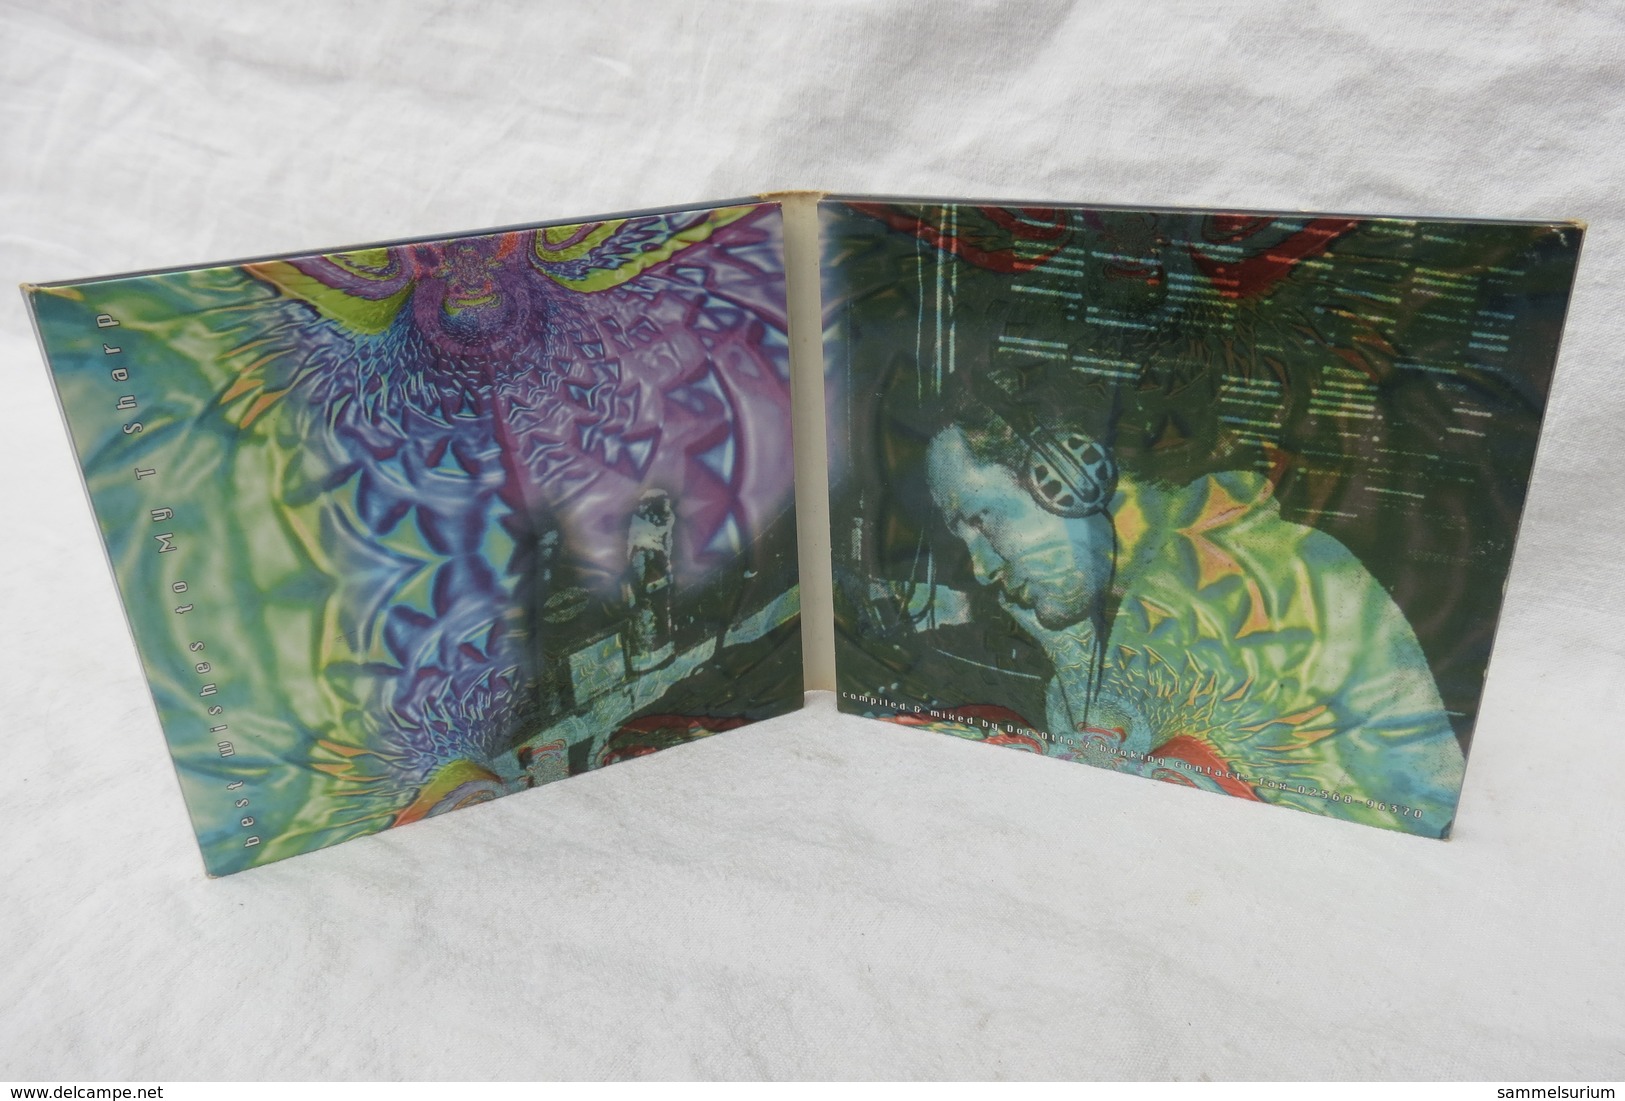 2 CDs "House Of Joy 2" Various Artists, Progressive & Hypnotic - Dance, Techno & House